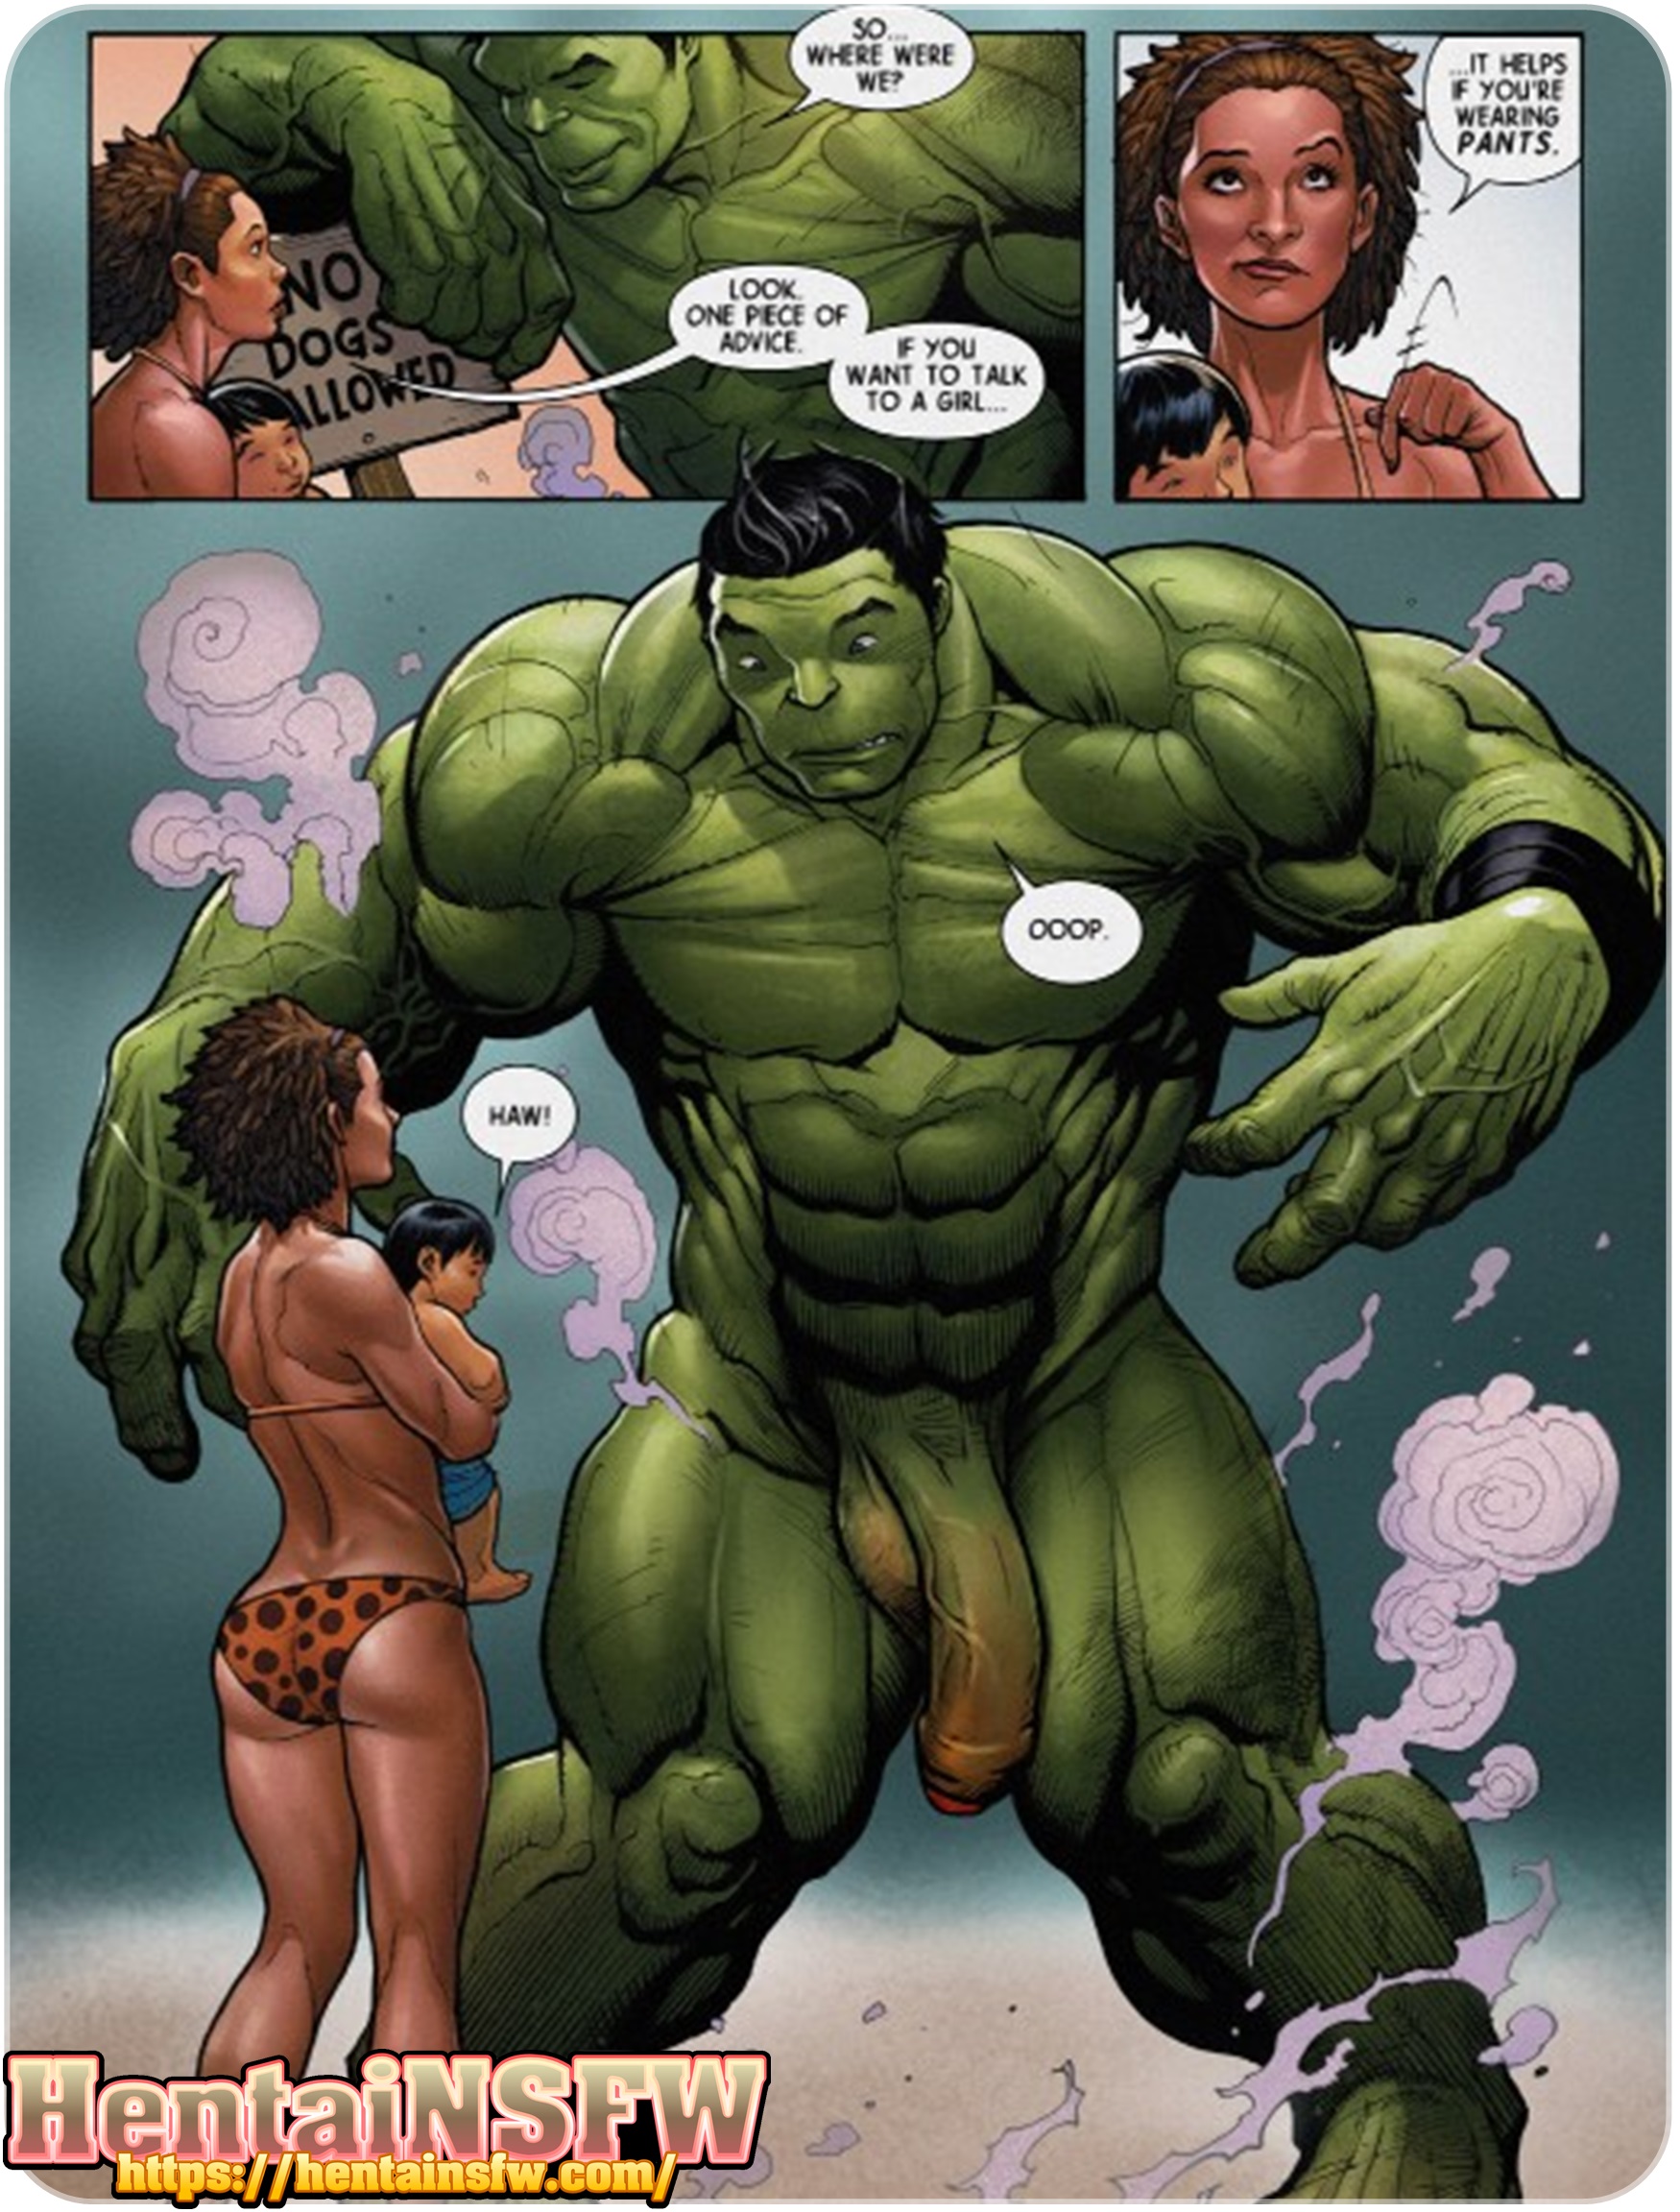 Avengers Cartoon - NSFW uncensored Avengers Infinity War comic cartoon porn art of Hulk's  monster cock hentai illustration. â€“ Hentai NSFW